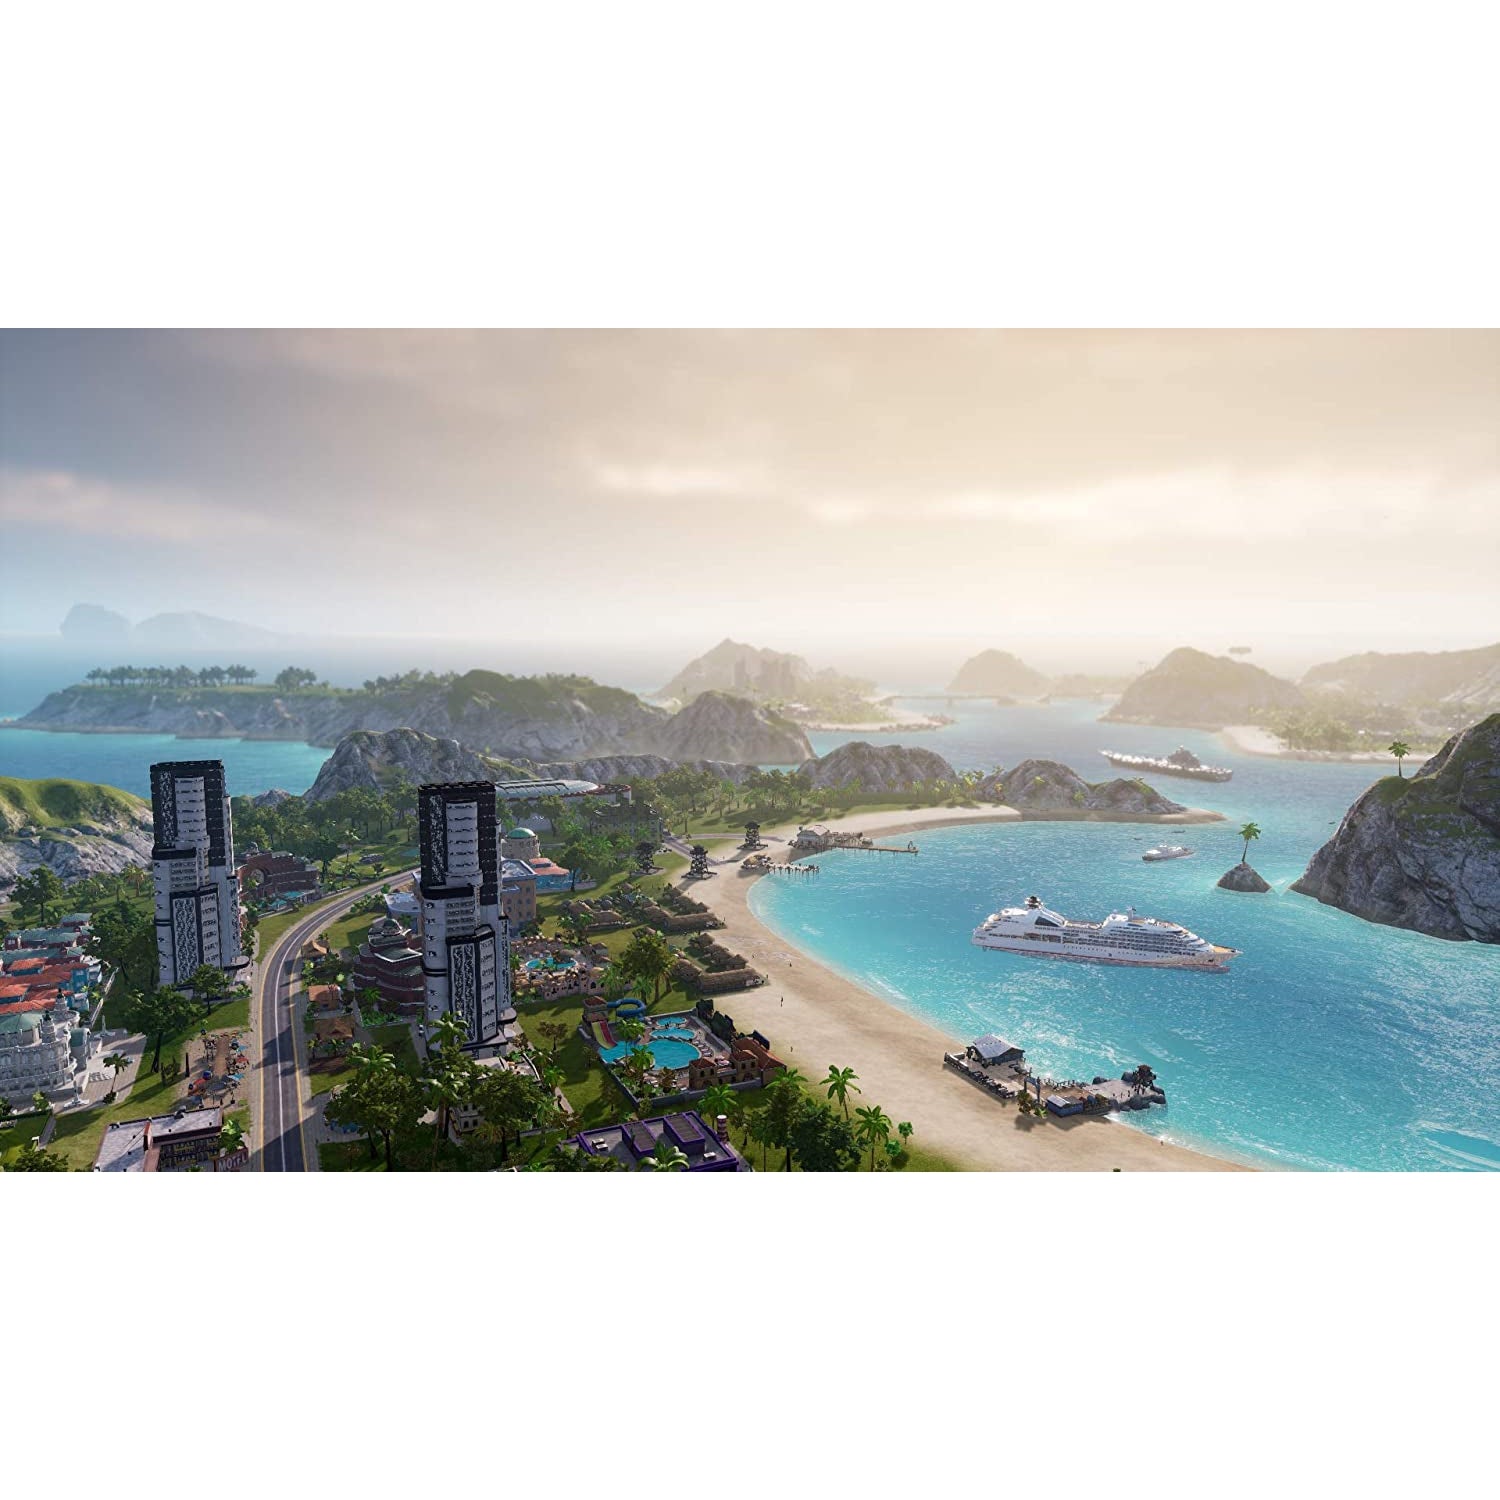 Tropico 6 (Xbox One)